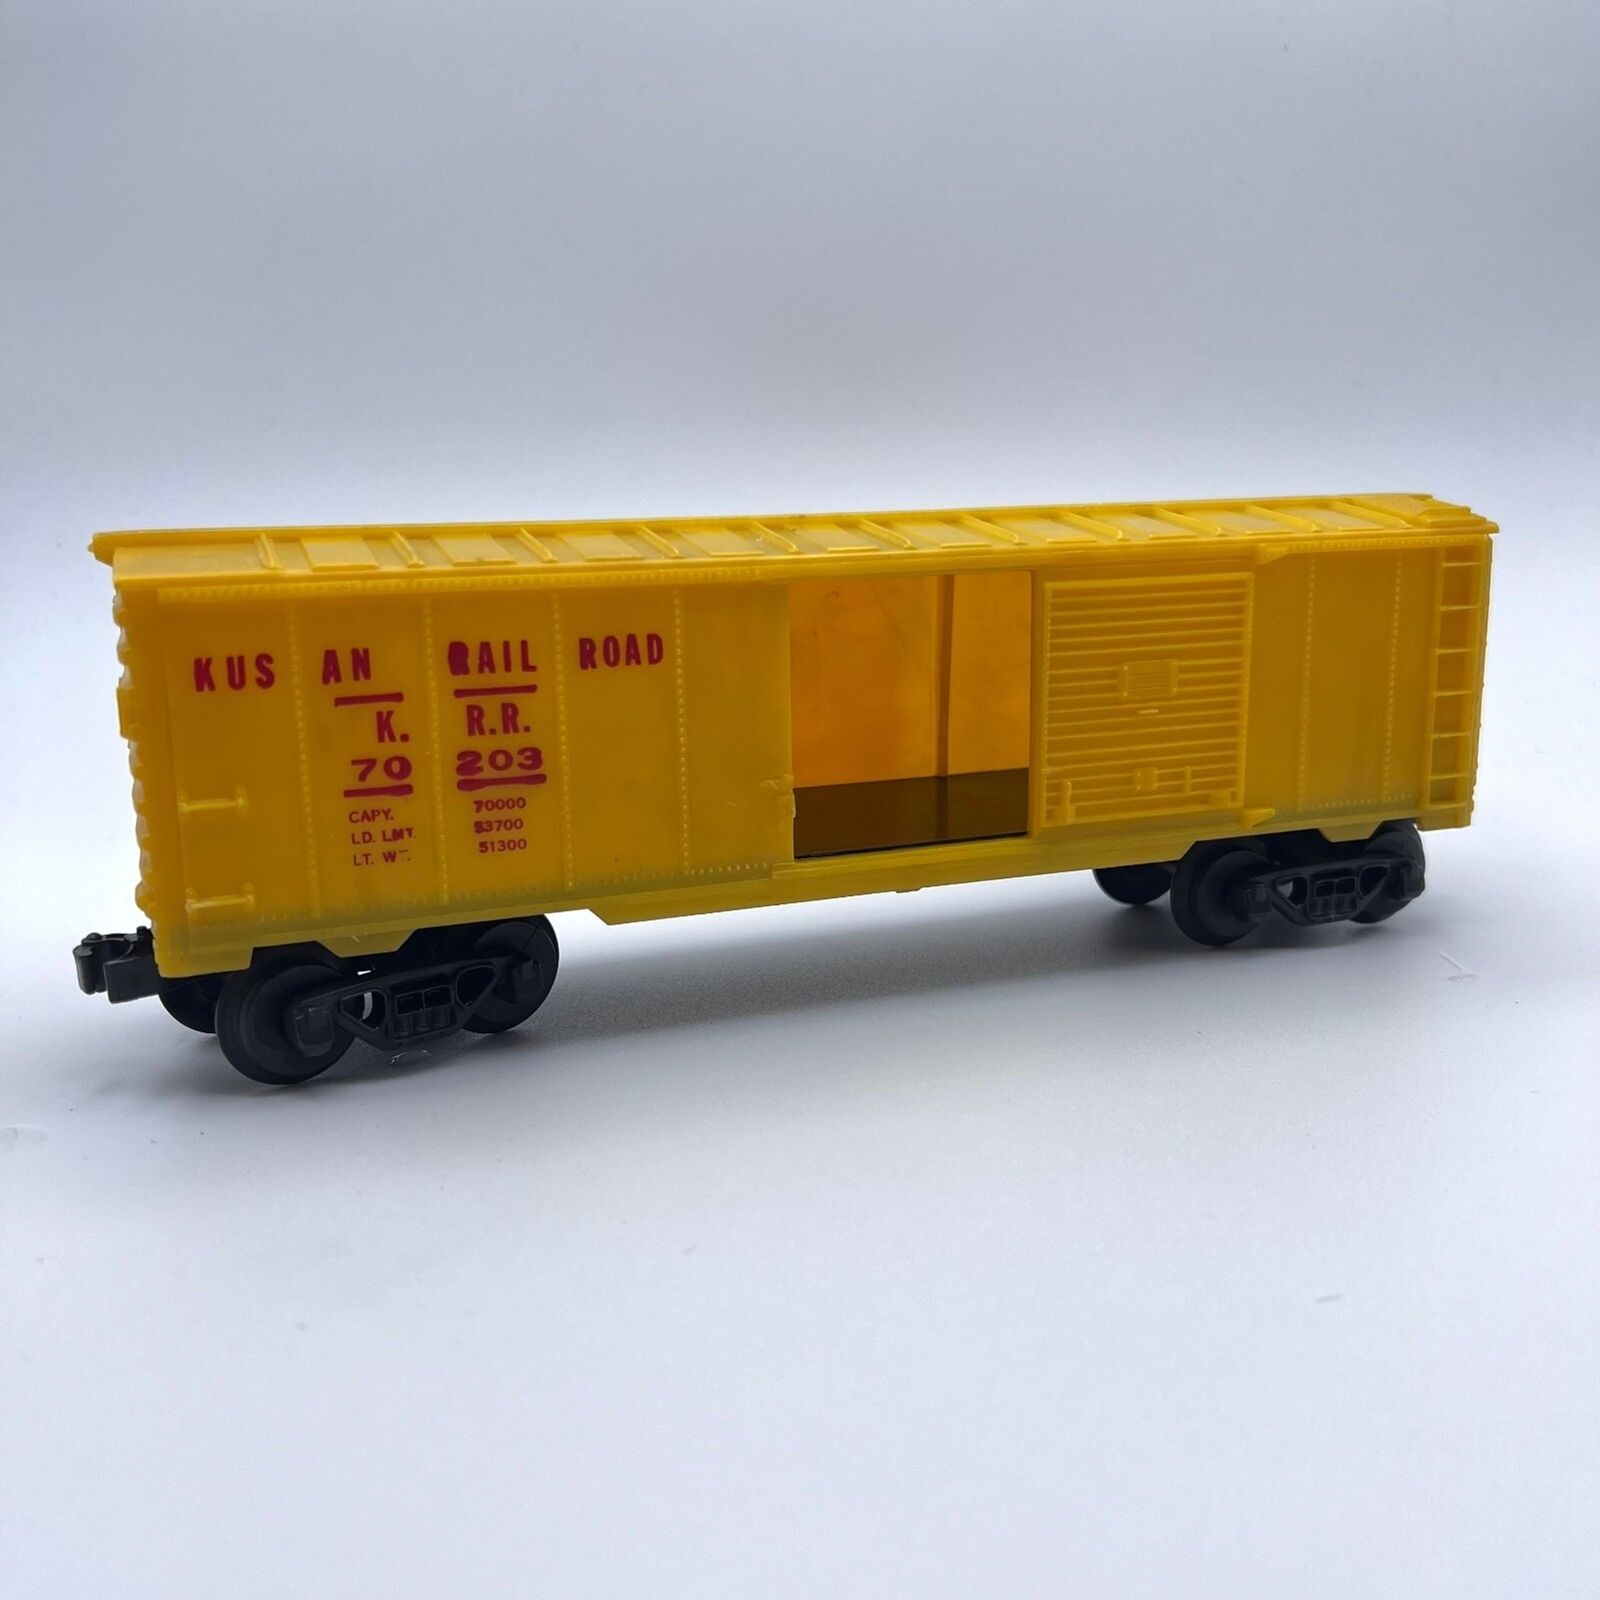 Kusan Auburn Kmt Railroad Box Car #70203 Yellow O Guage